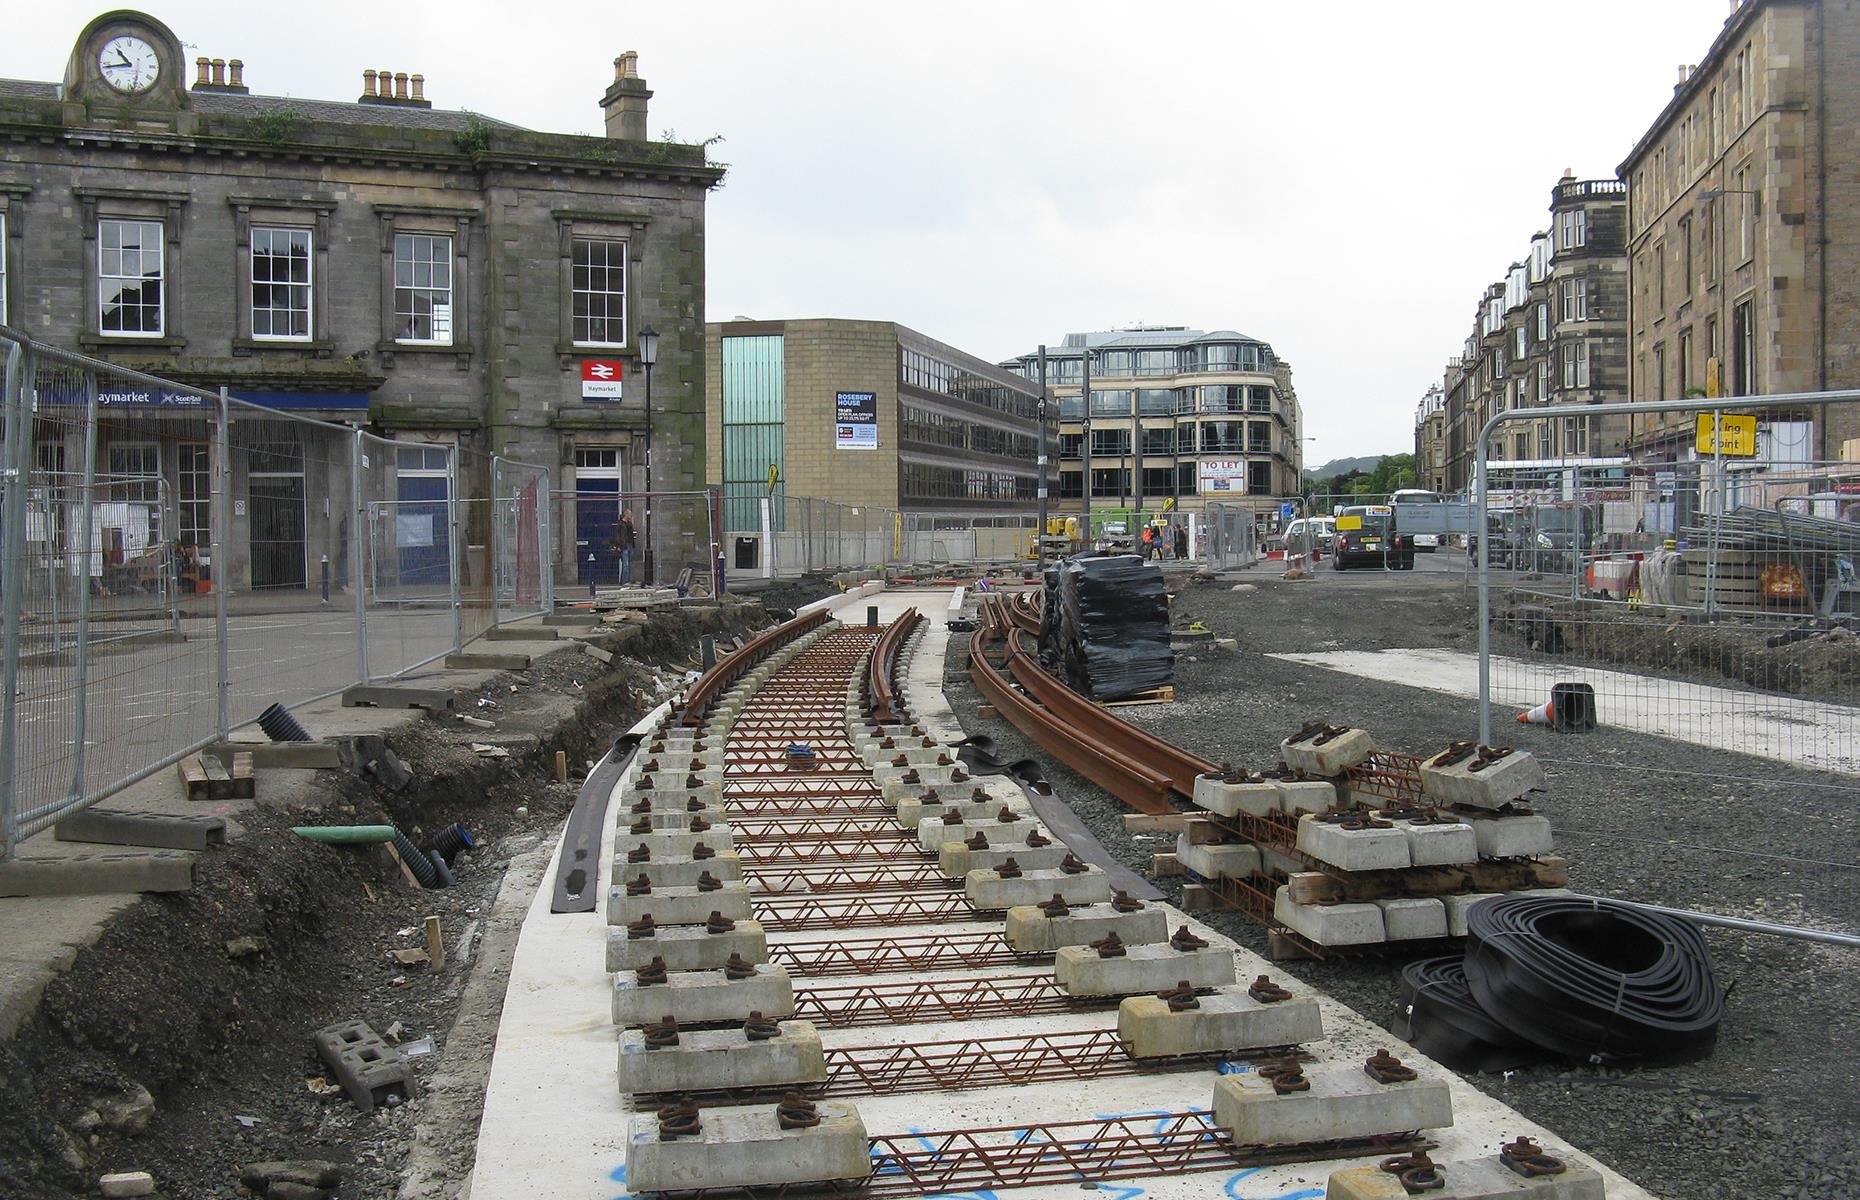 Edinburgh tram system, 2014